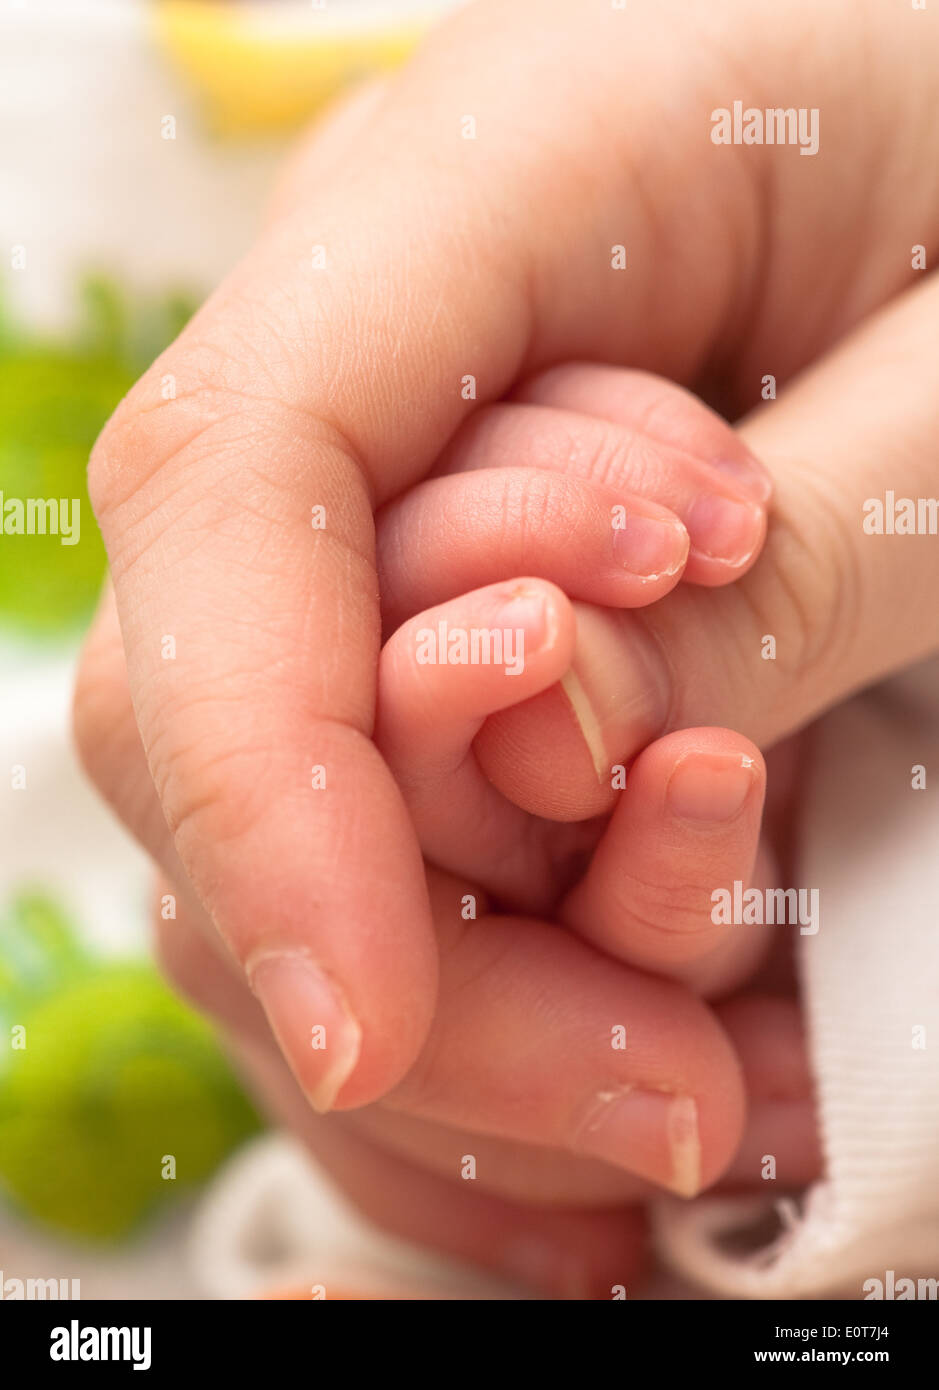 Babyhand umfasst Daumen - baby holding mother's finger Banque D'Images